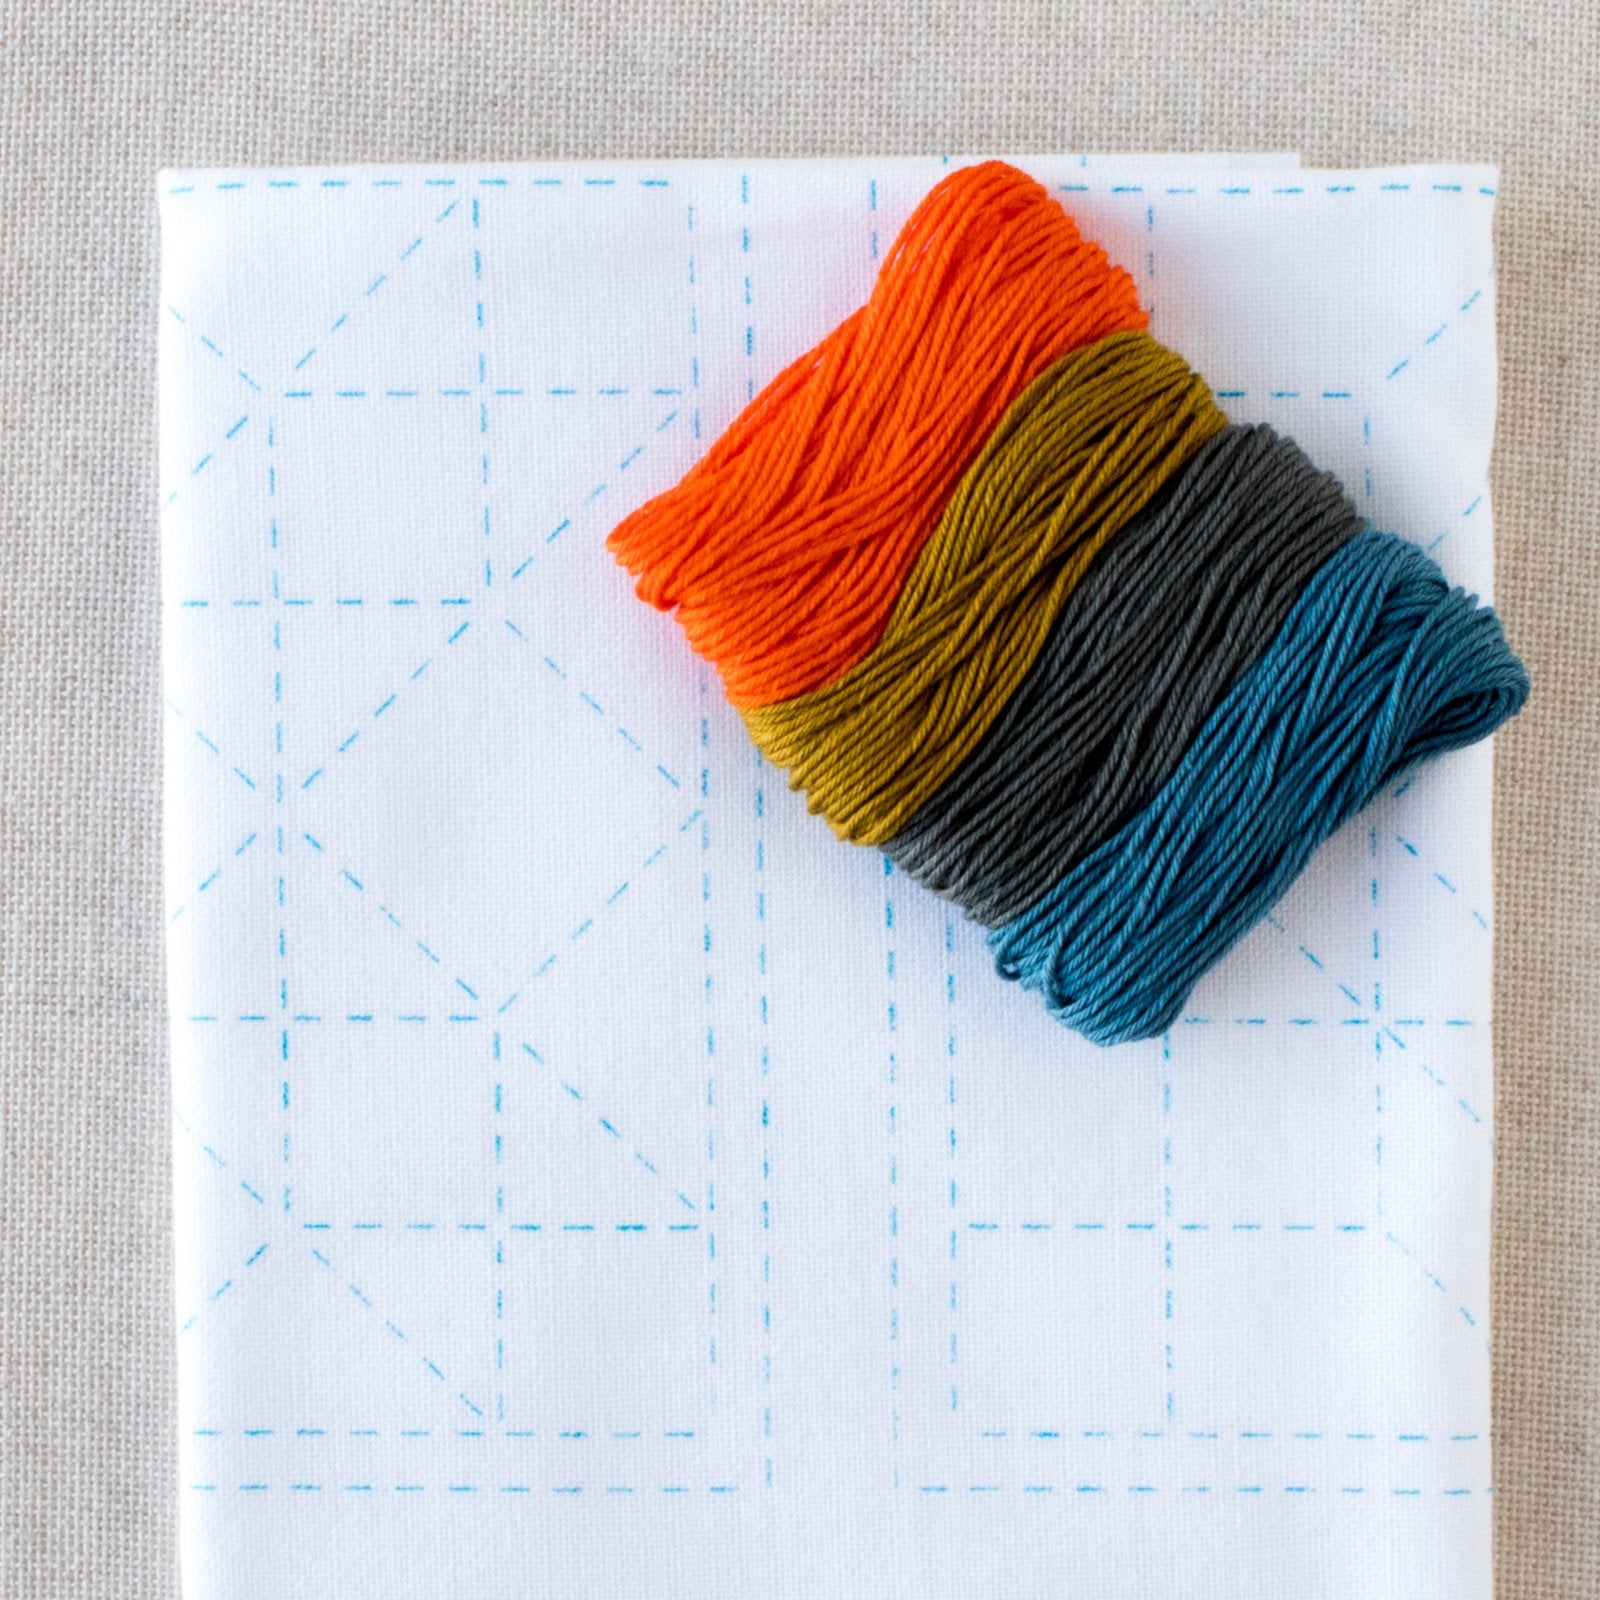 Sashiko Embroidery Kit Sampler Square – Hipstitch